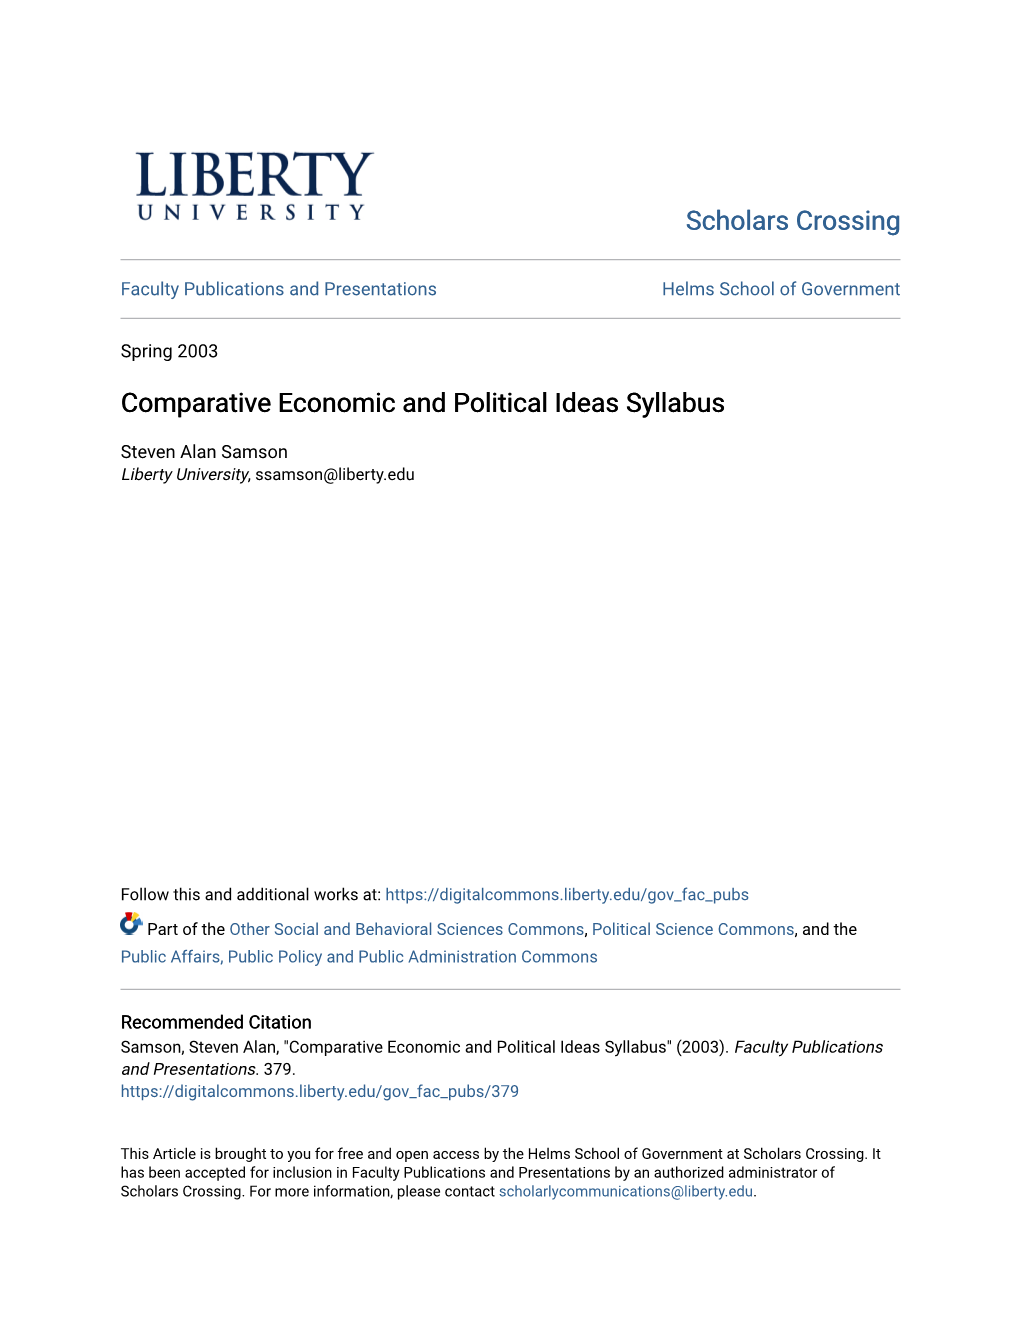 Comparative Economic and Political Ideas Syllabus